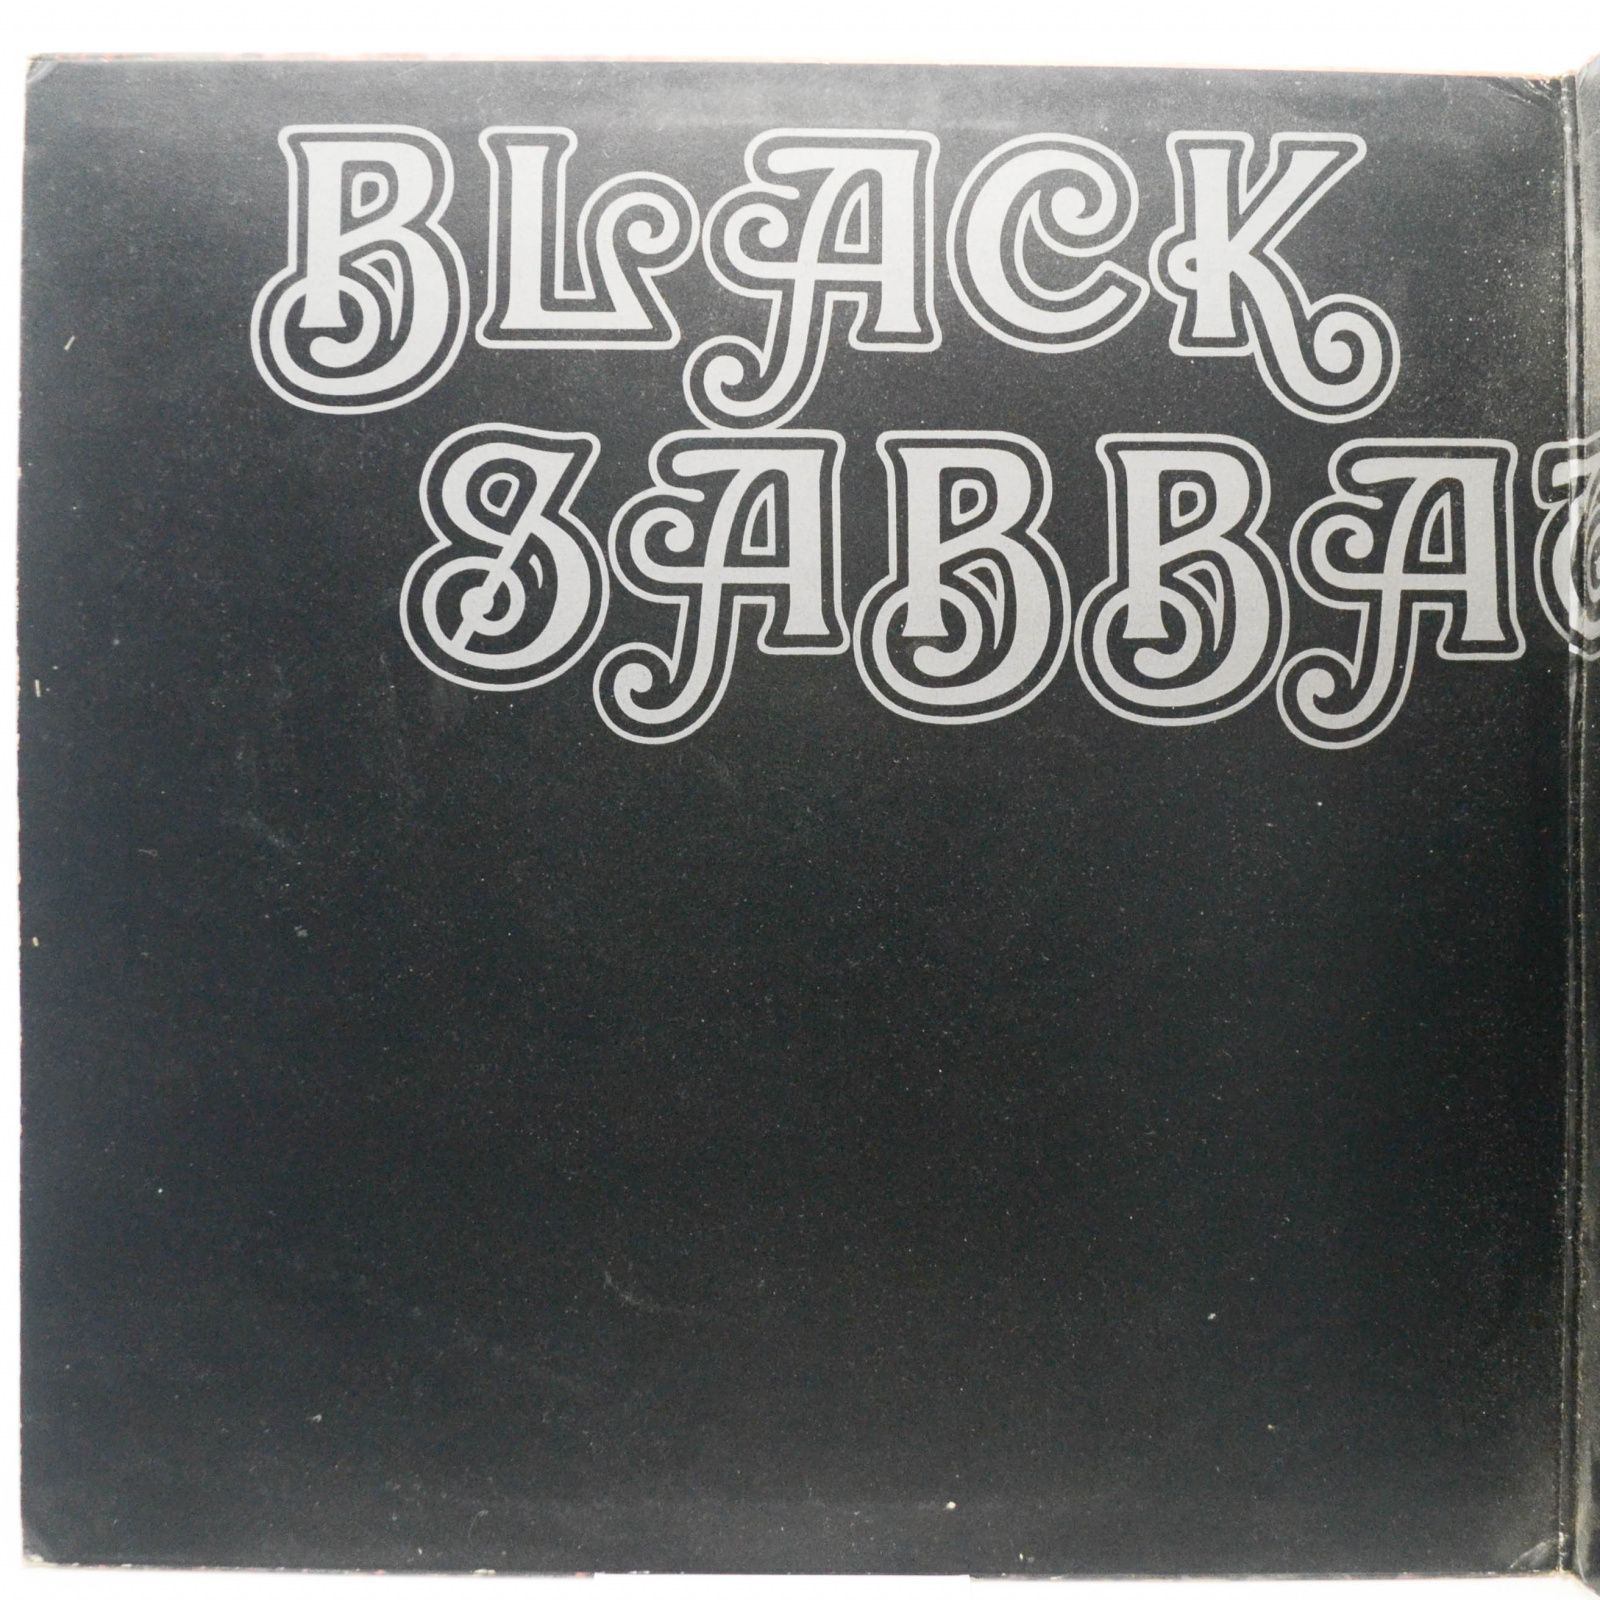 Black Sabbath — Black Sabbath (UK, Vertigo swirl), 1970